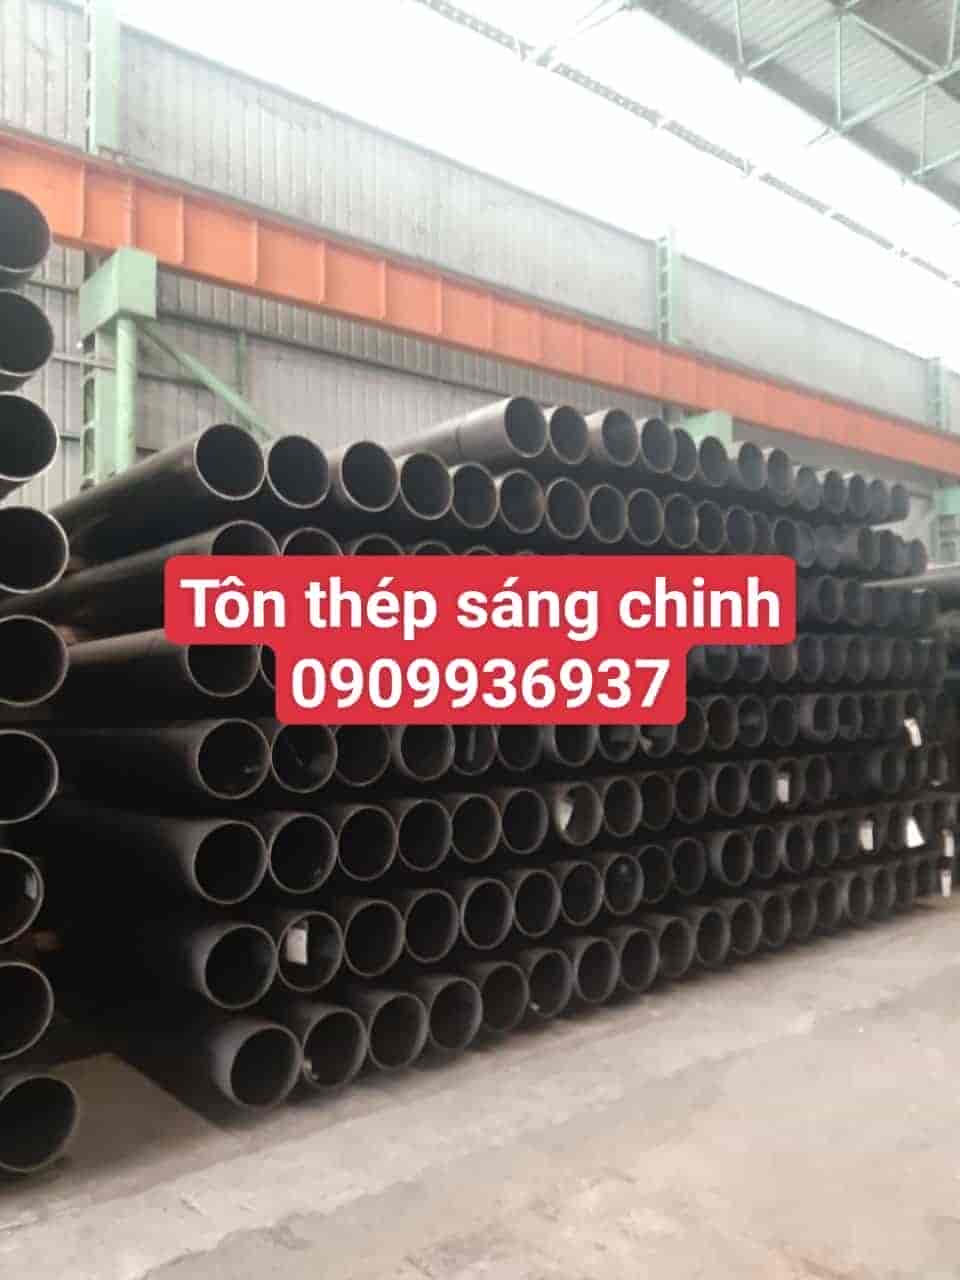 ong-thep-sang-chinh-steel-tphcm